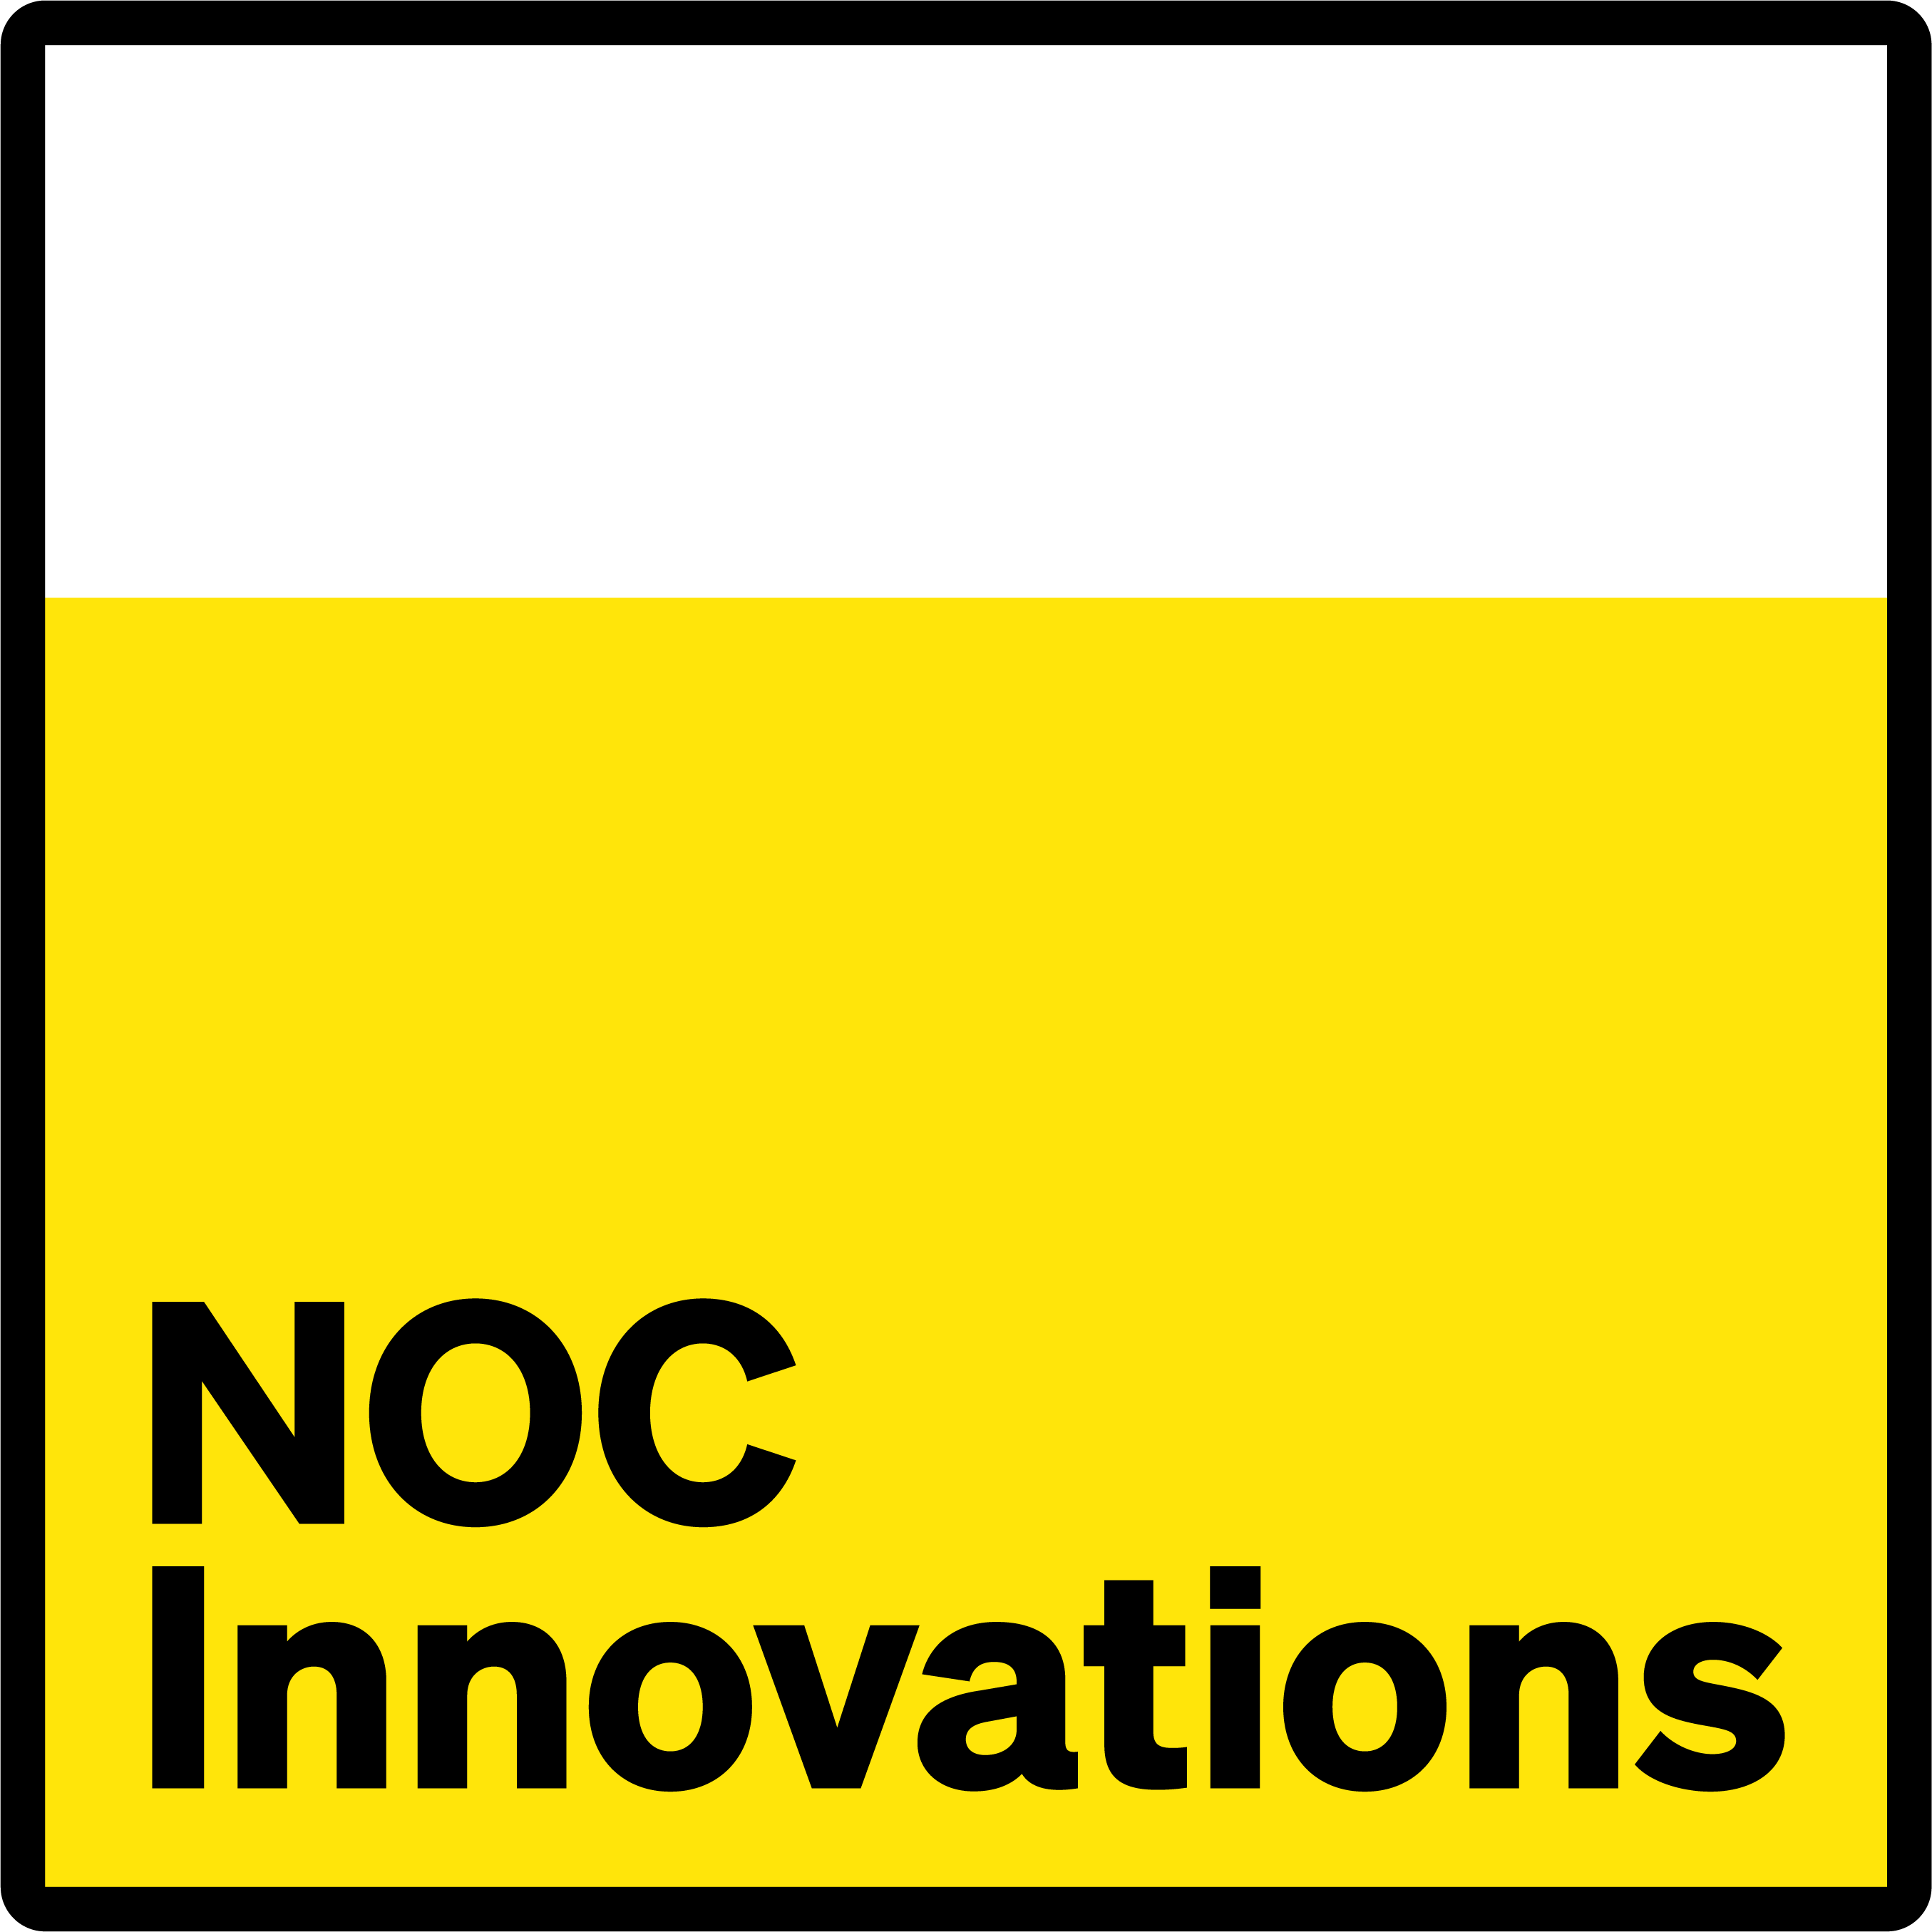 NOC Innovations logo